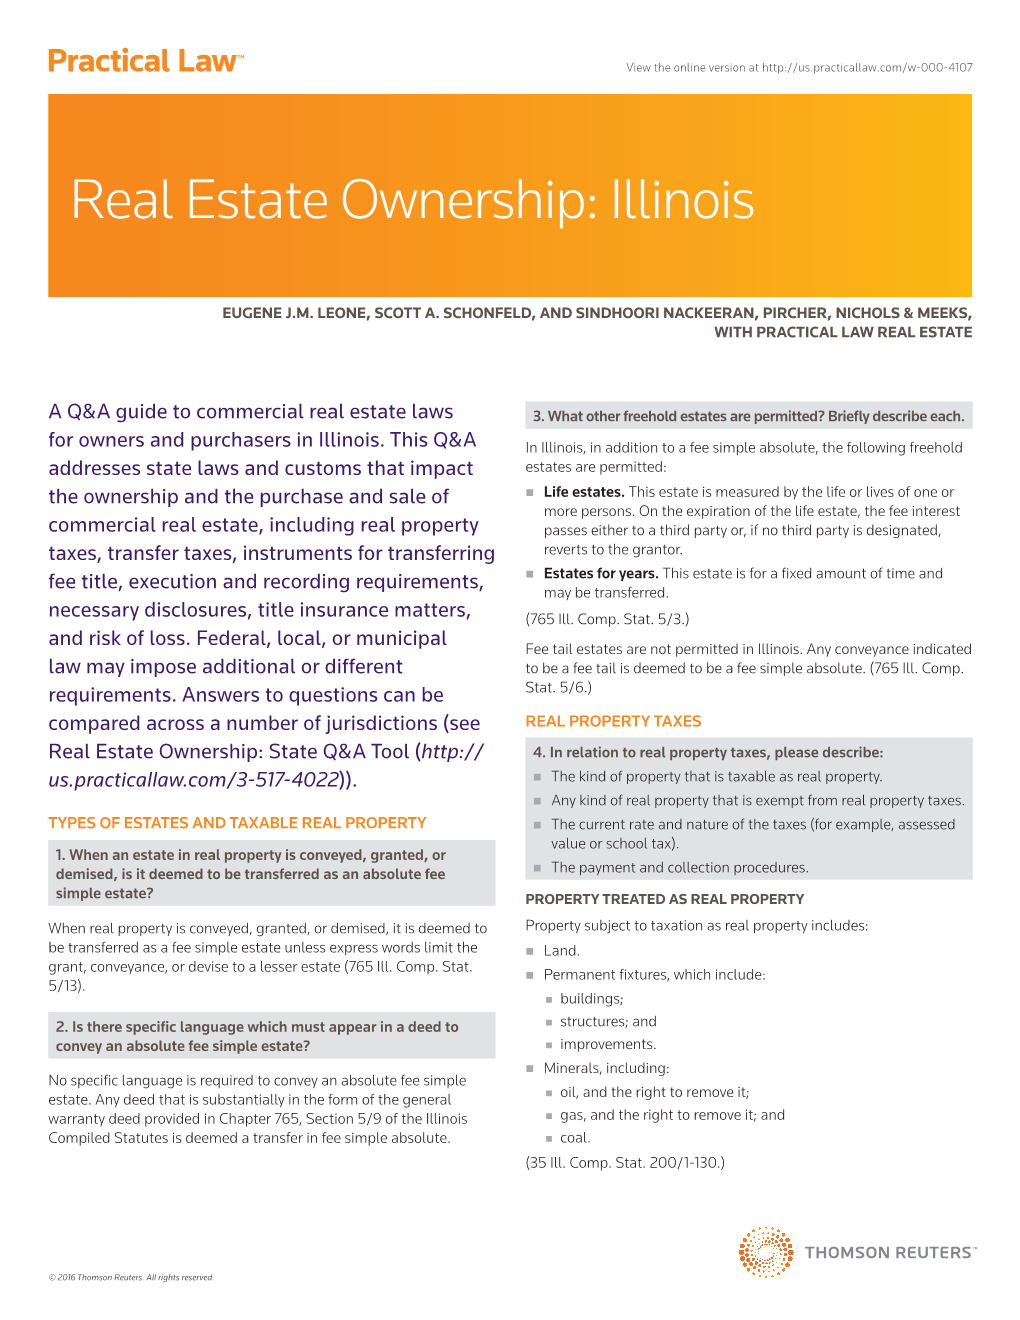 Real Estate Ownership: Illinois